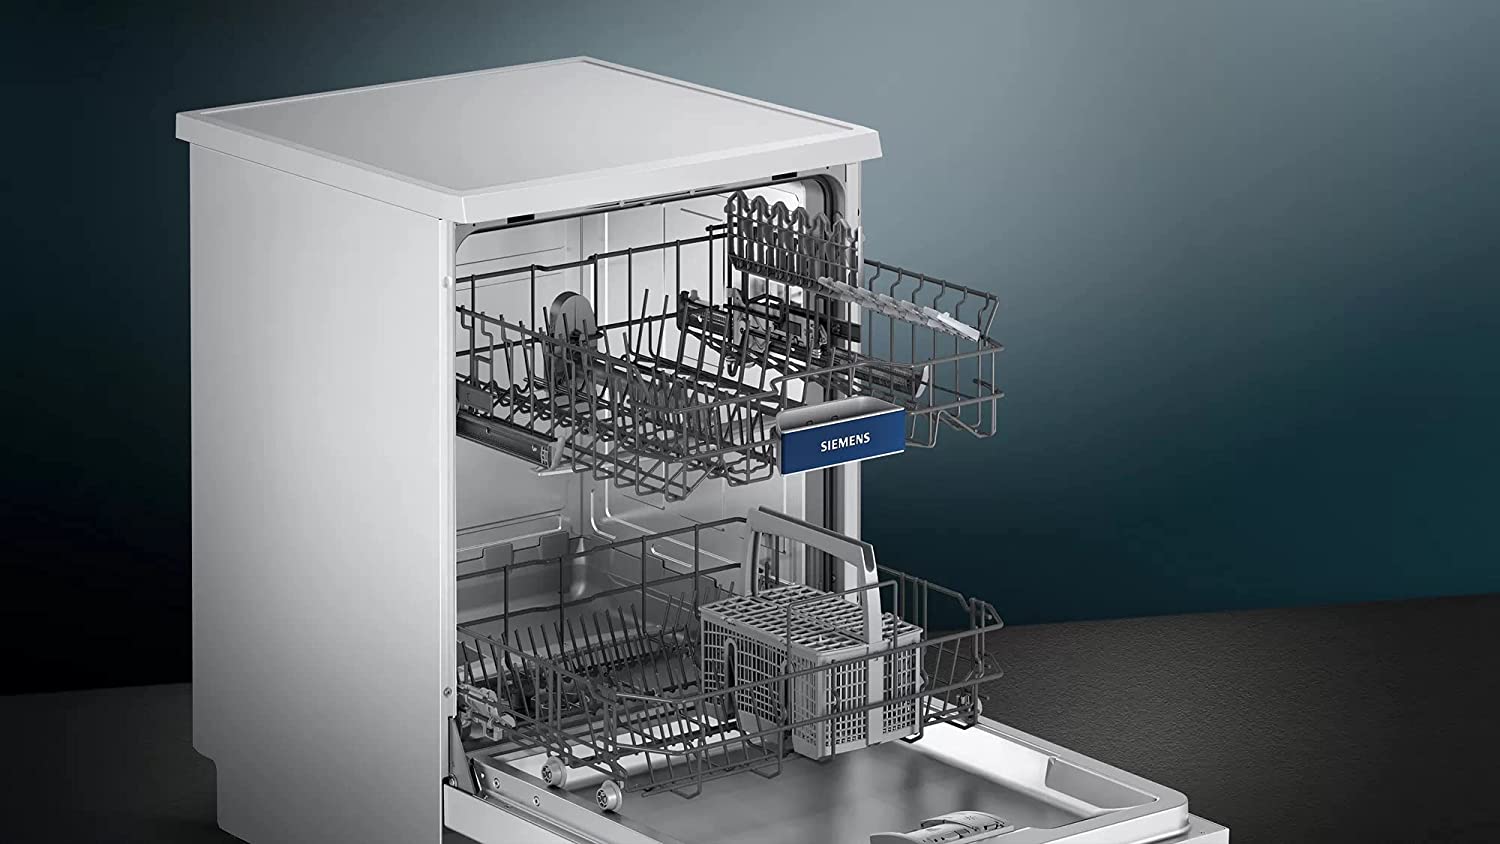 Siemens SN25IW00TI 13 Place Settings iQ500 free-standing dishwasher ( White) - Mahajan Electronics Online